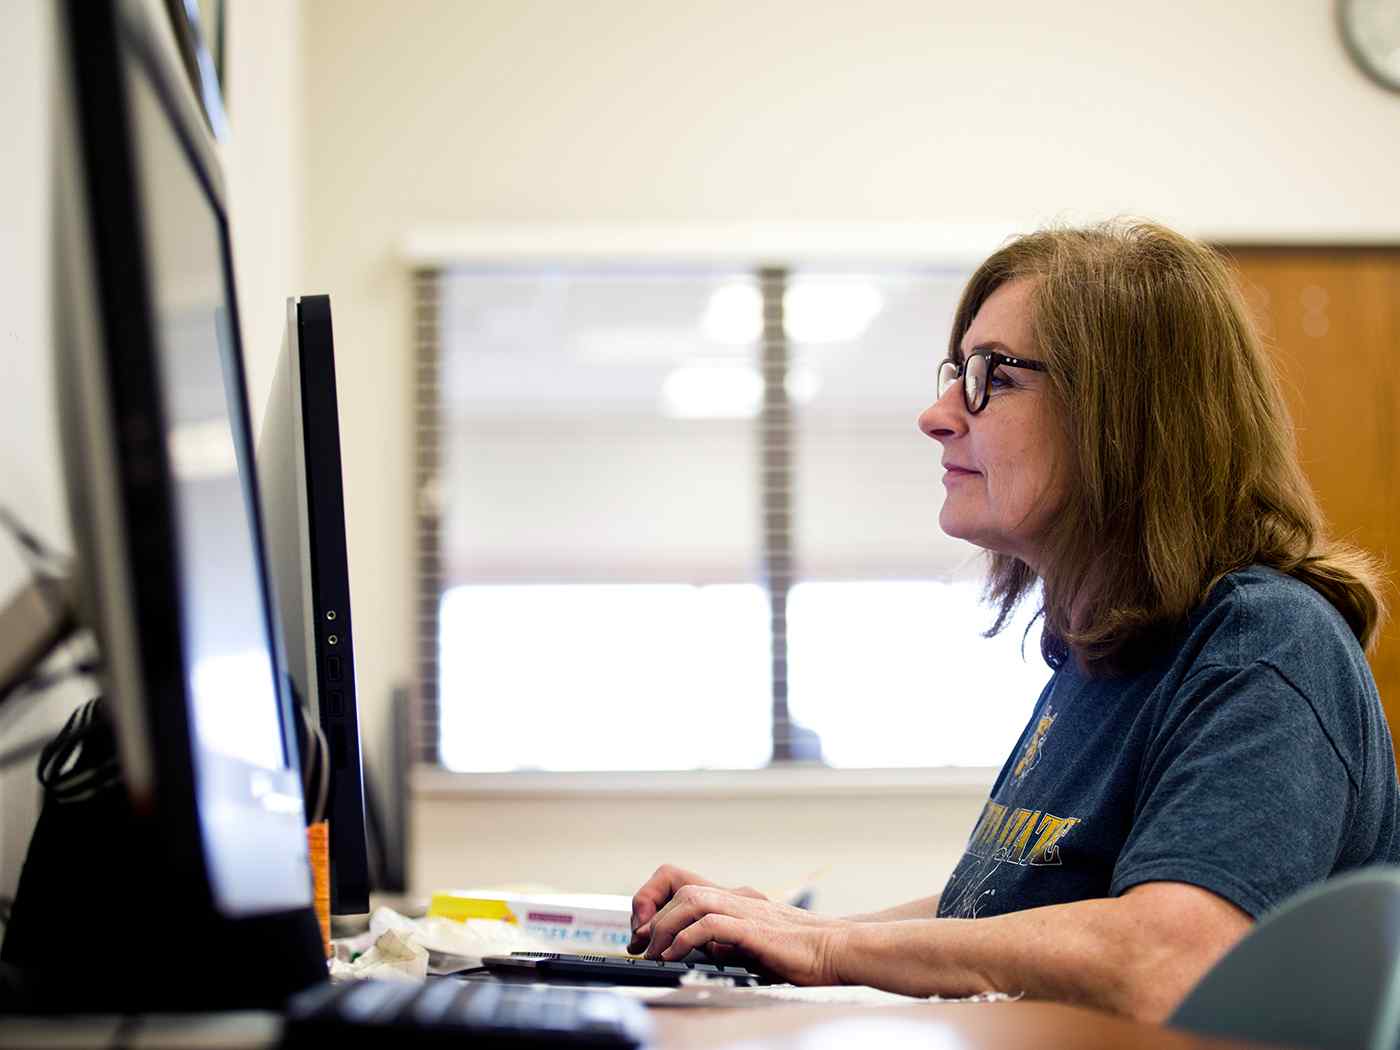 Adult learner completing computer work